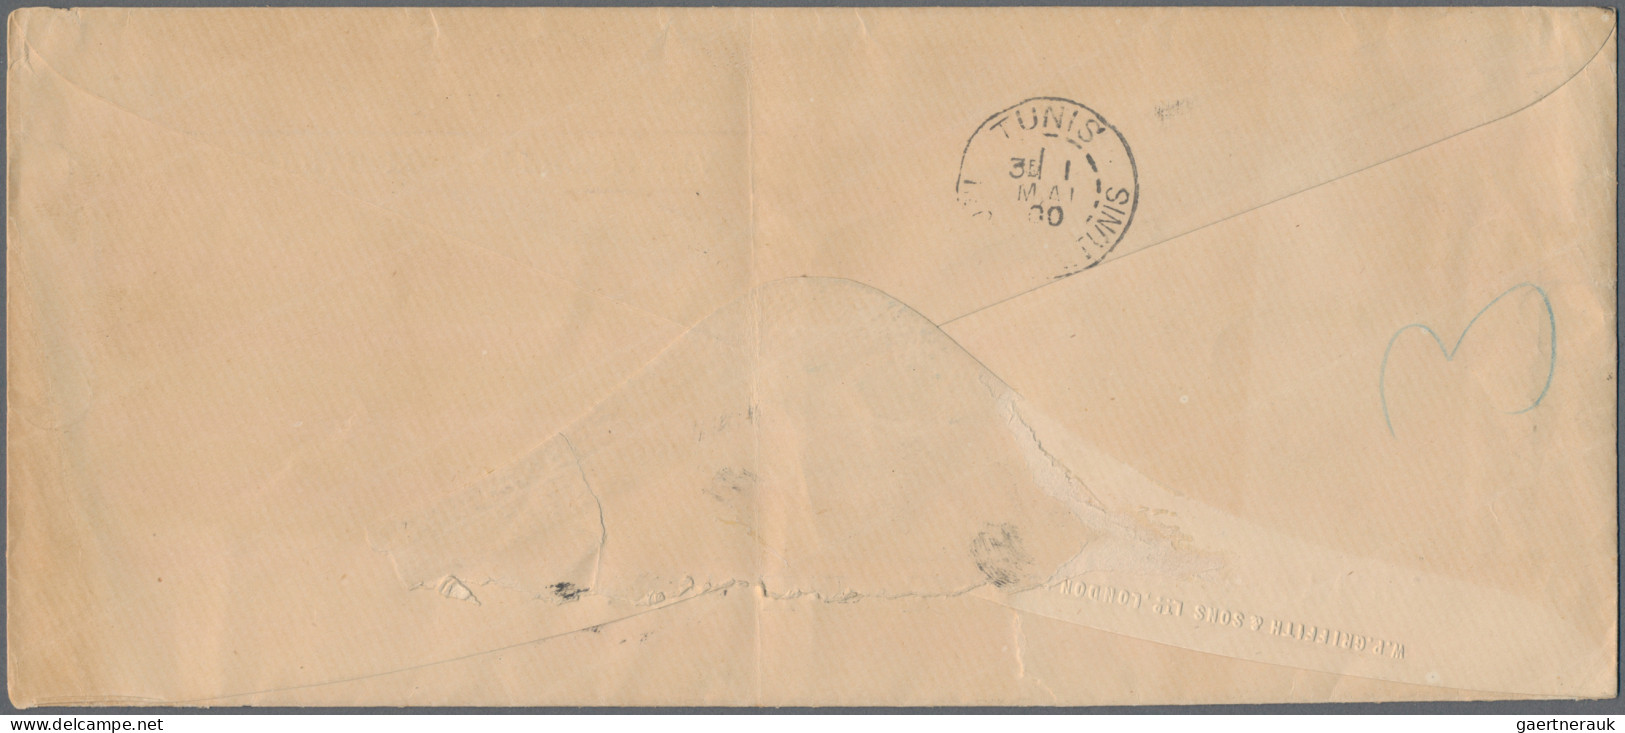 Malta: 1900 Registered Official Envelope Headed "On Her Majesty's Service" Addre - Malte